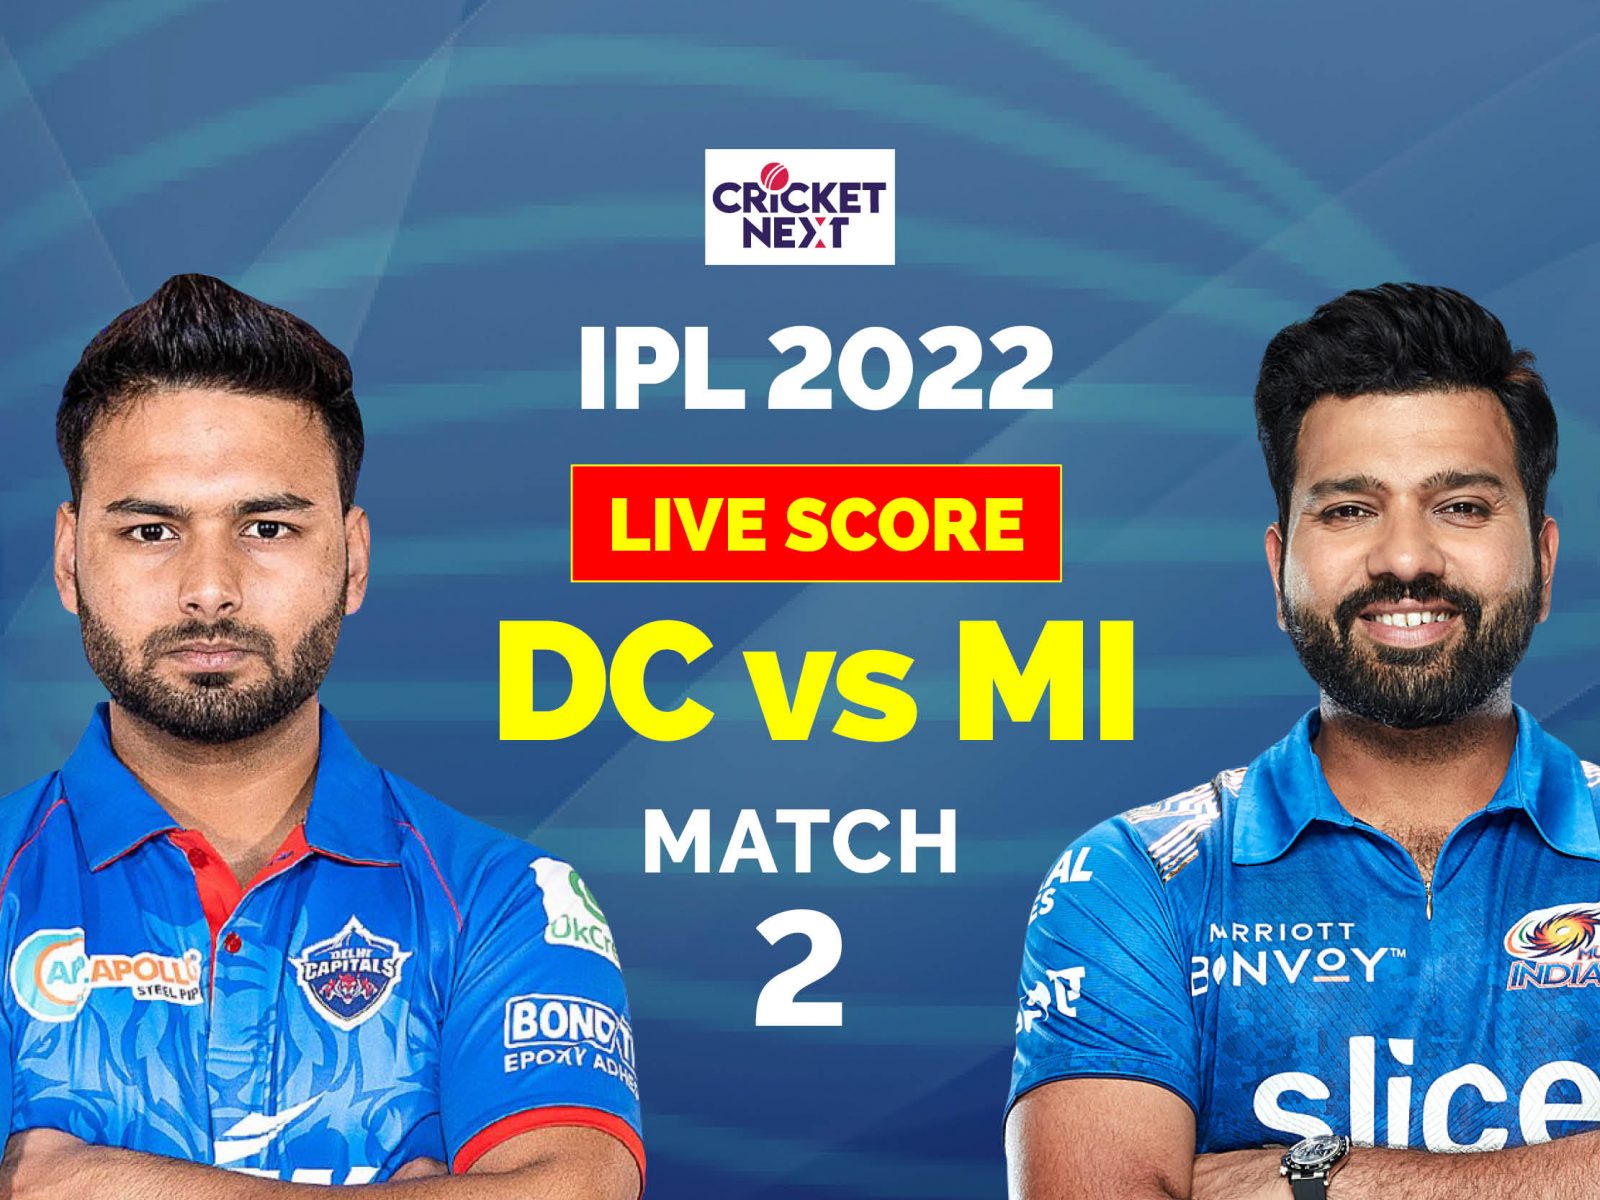 DC vs MI IPL 2022 Highlights - Delhi Capitals Off To Winning Start After Improbable Win